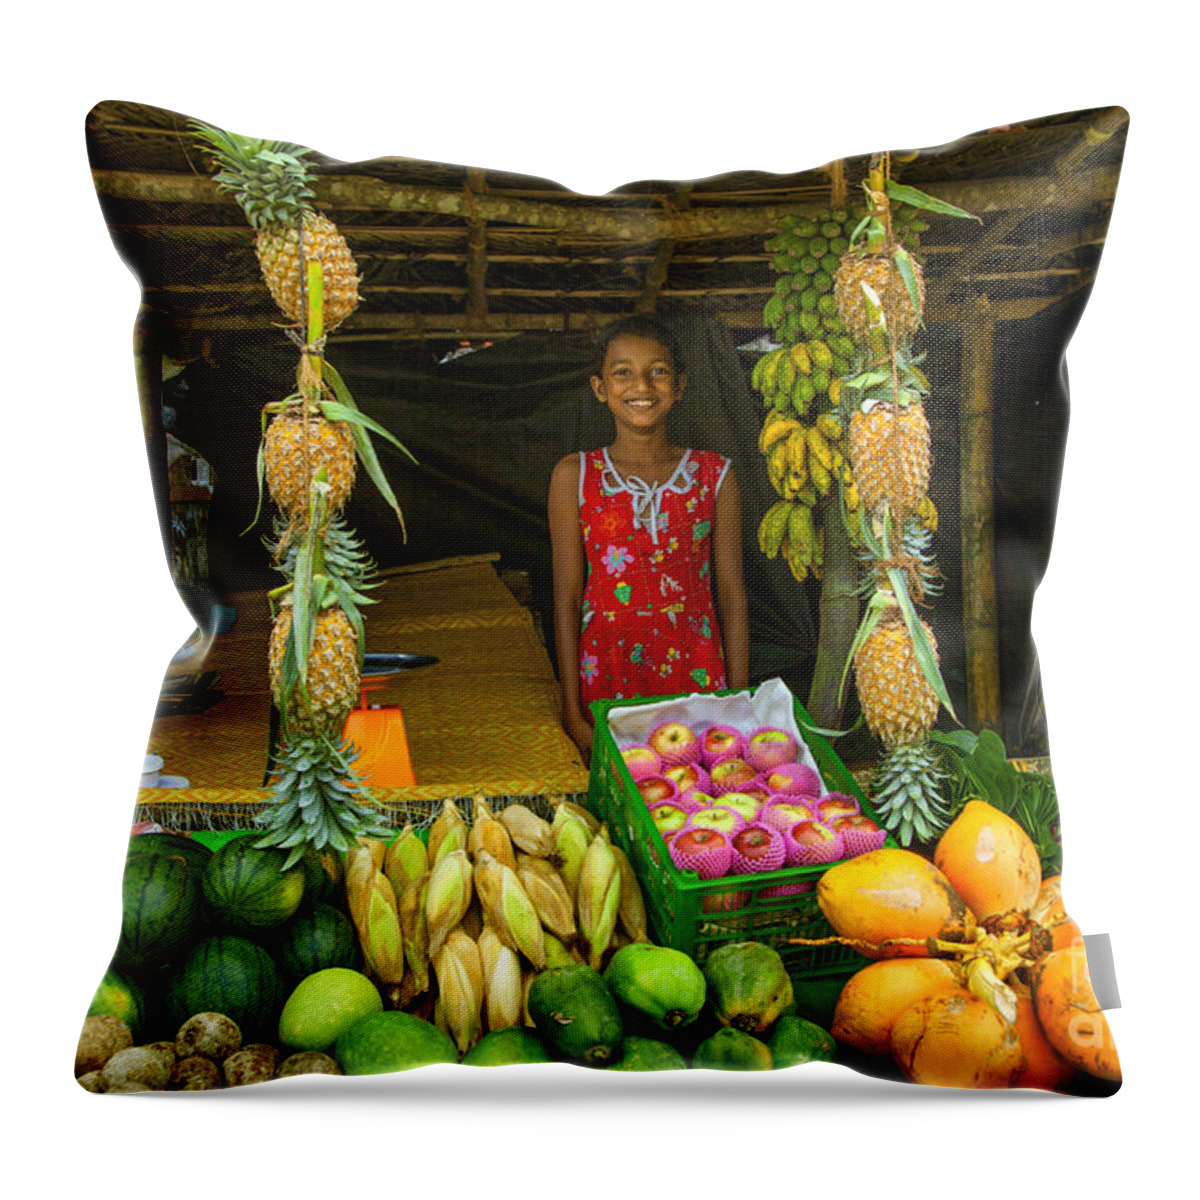 Sri Lanka Throw Pillow featuring the photograph Tropical Fruit Shop by Gina Koch